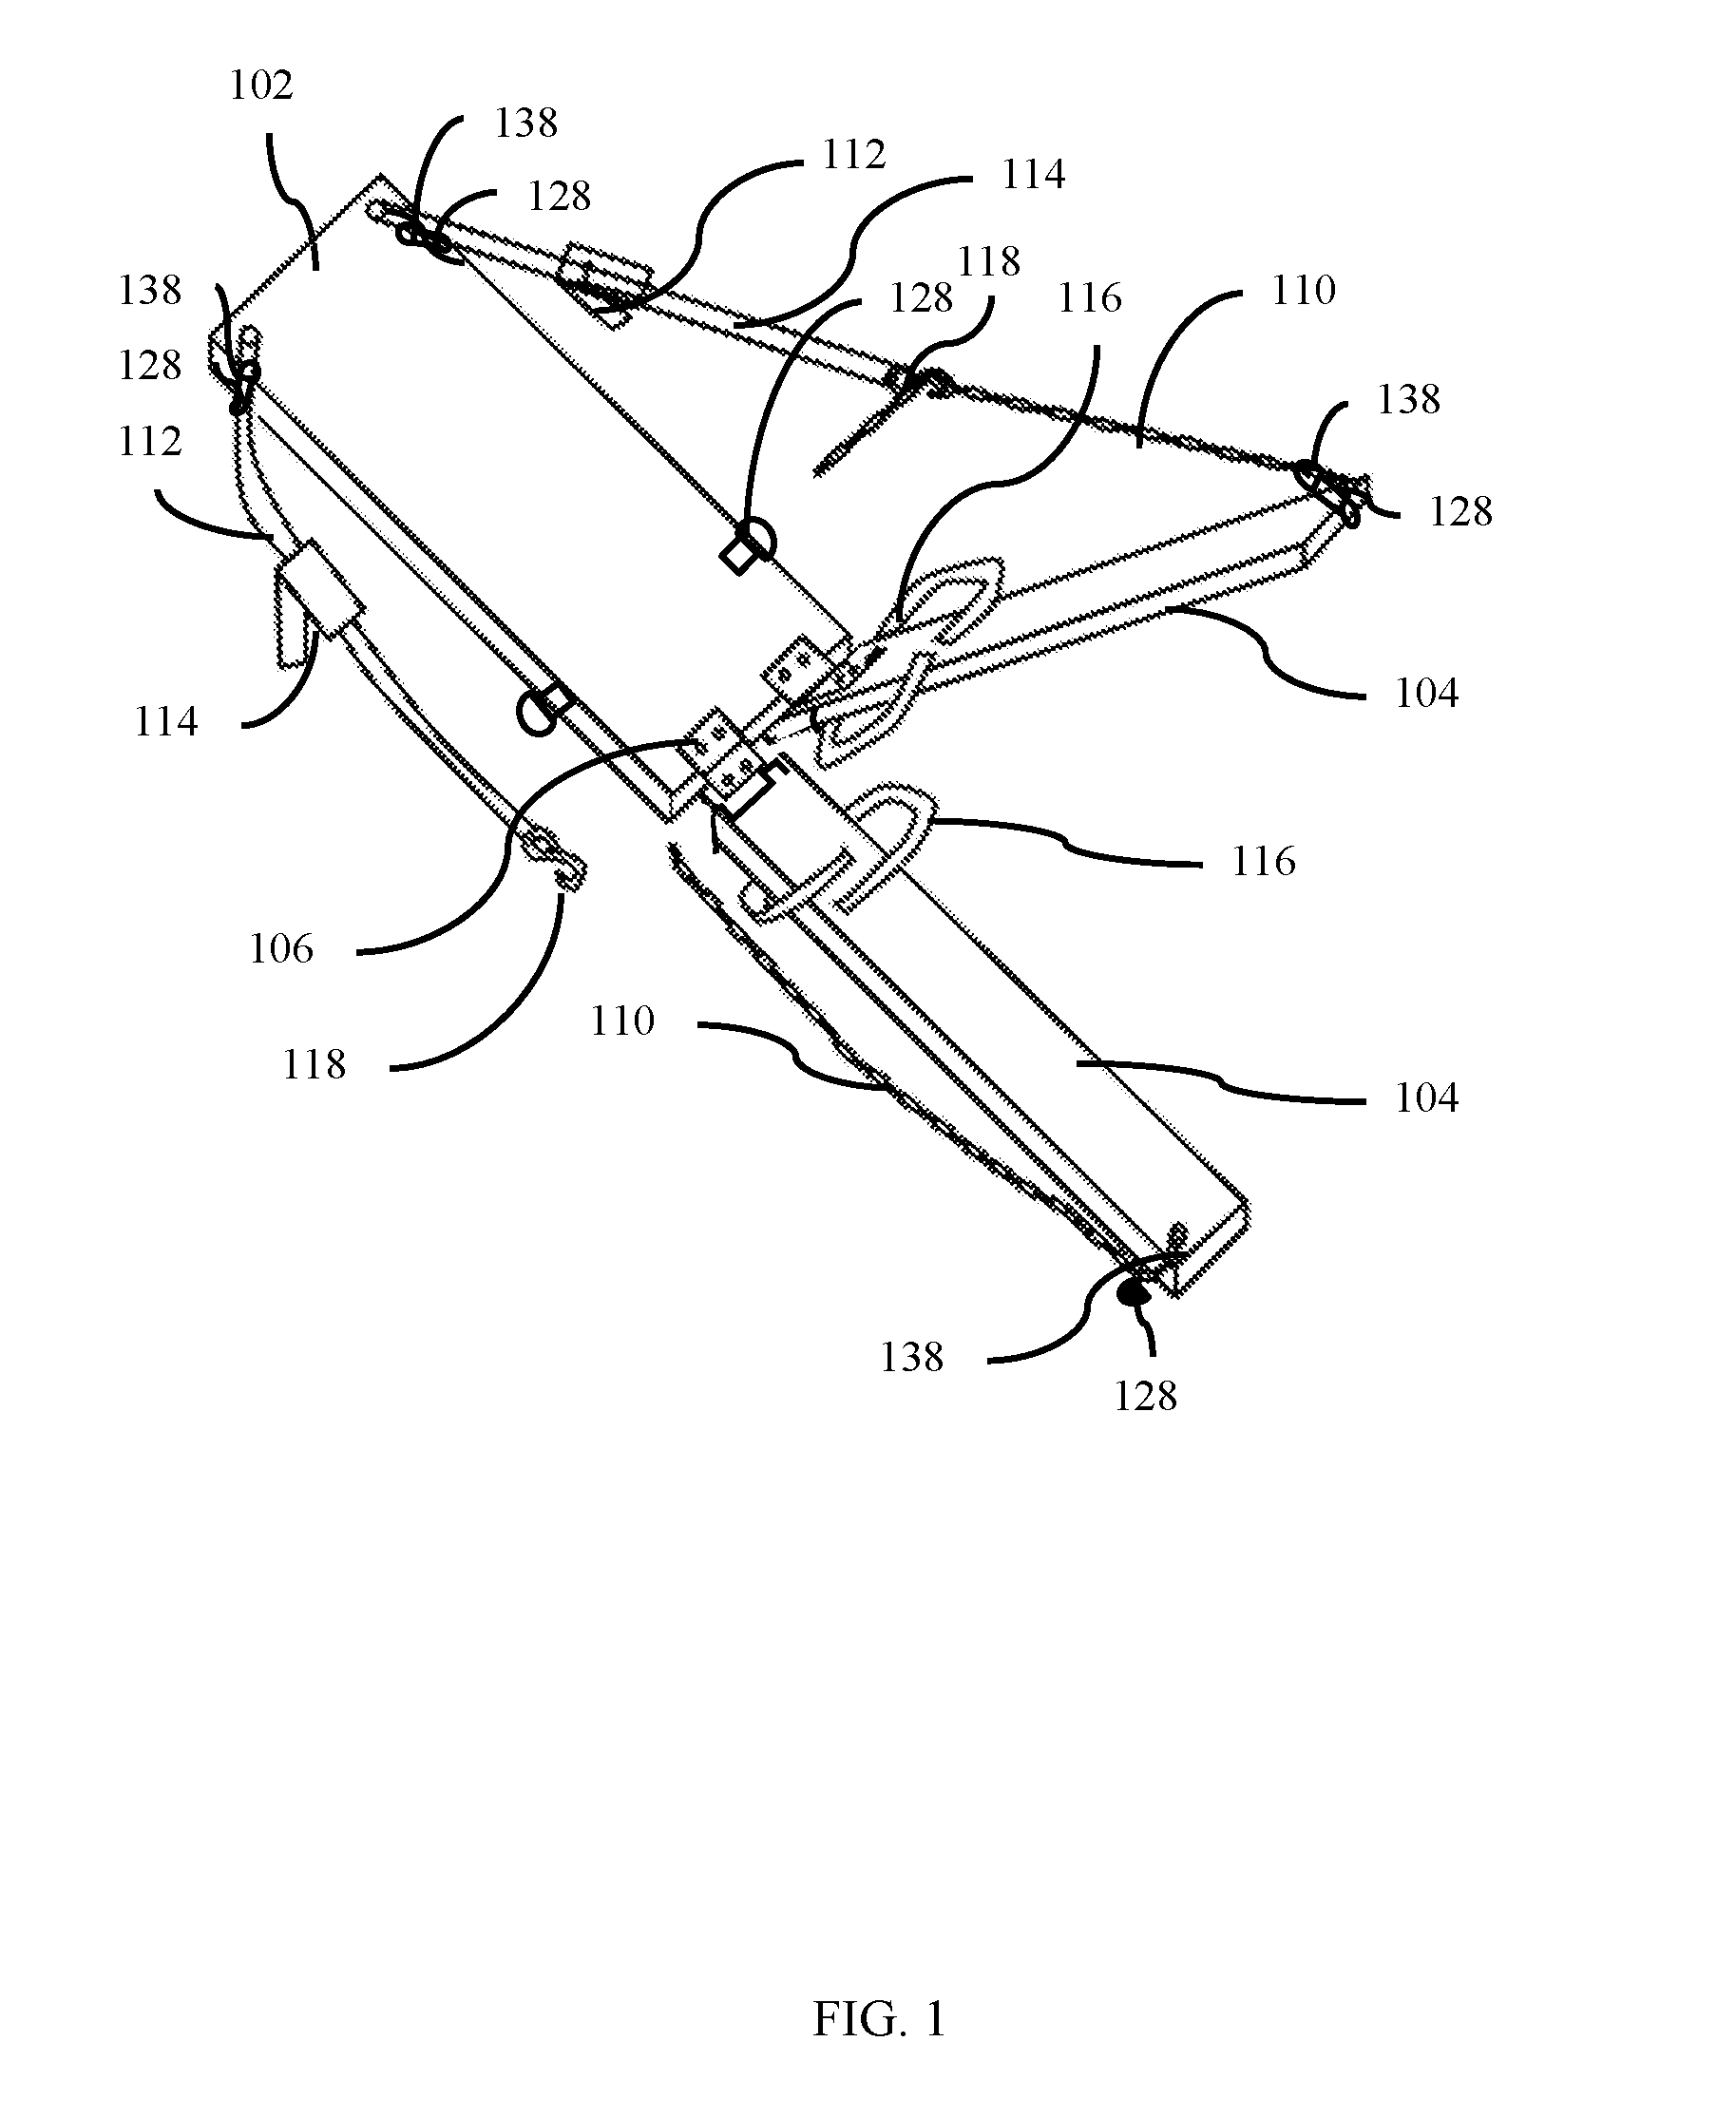 Portable hamstring stretcher/exerciser device